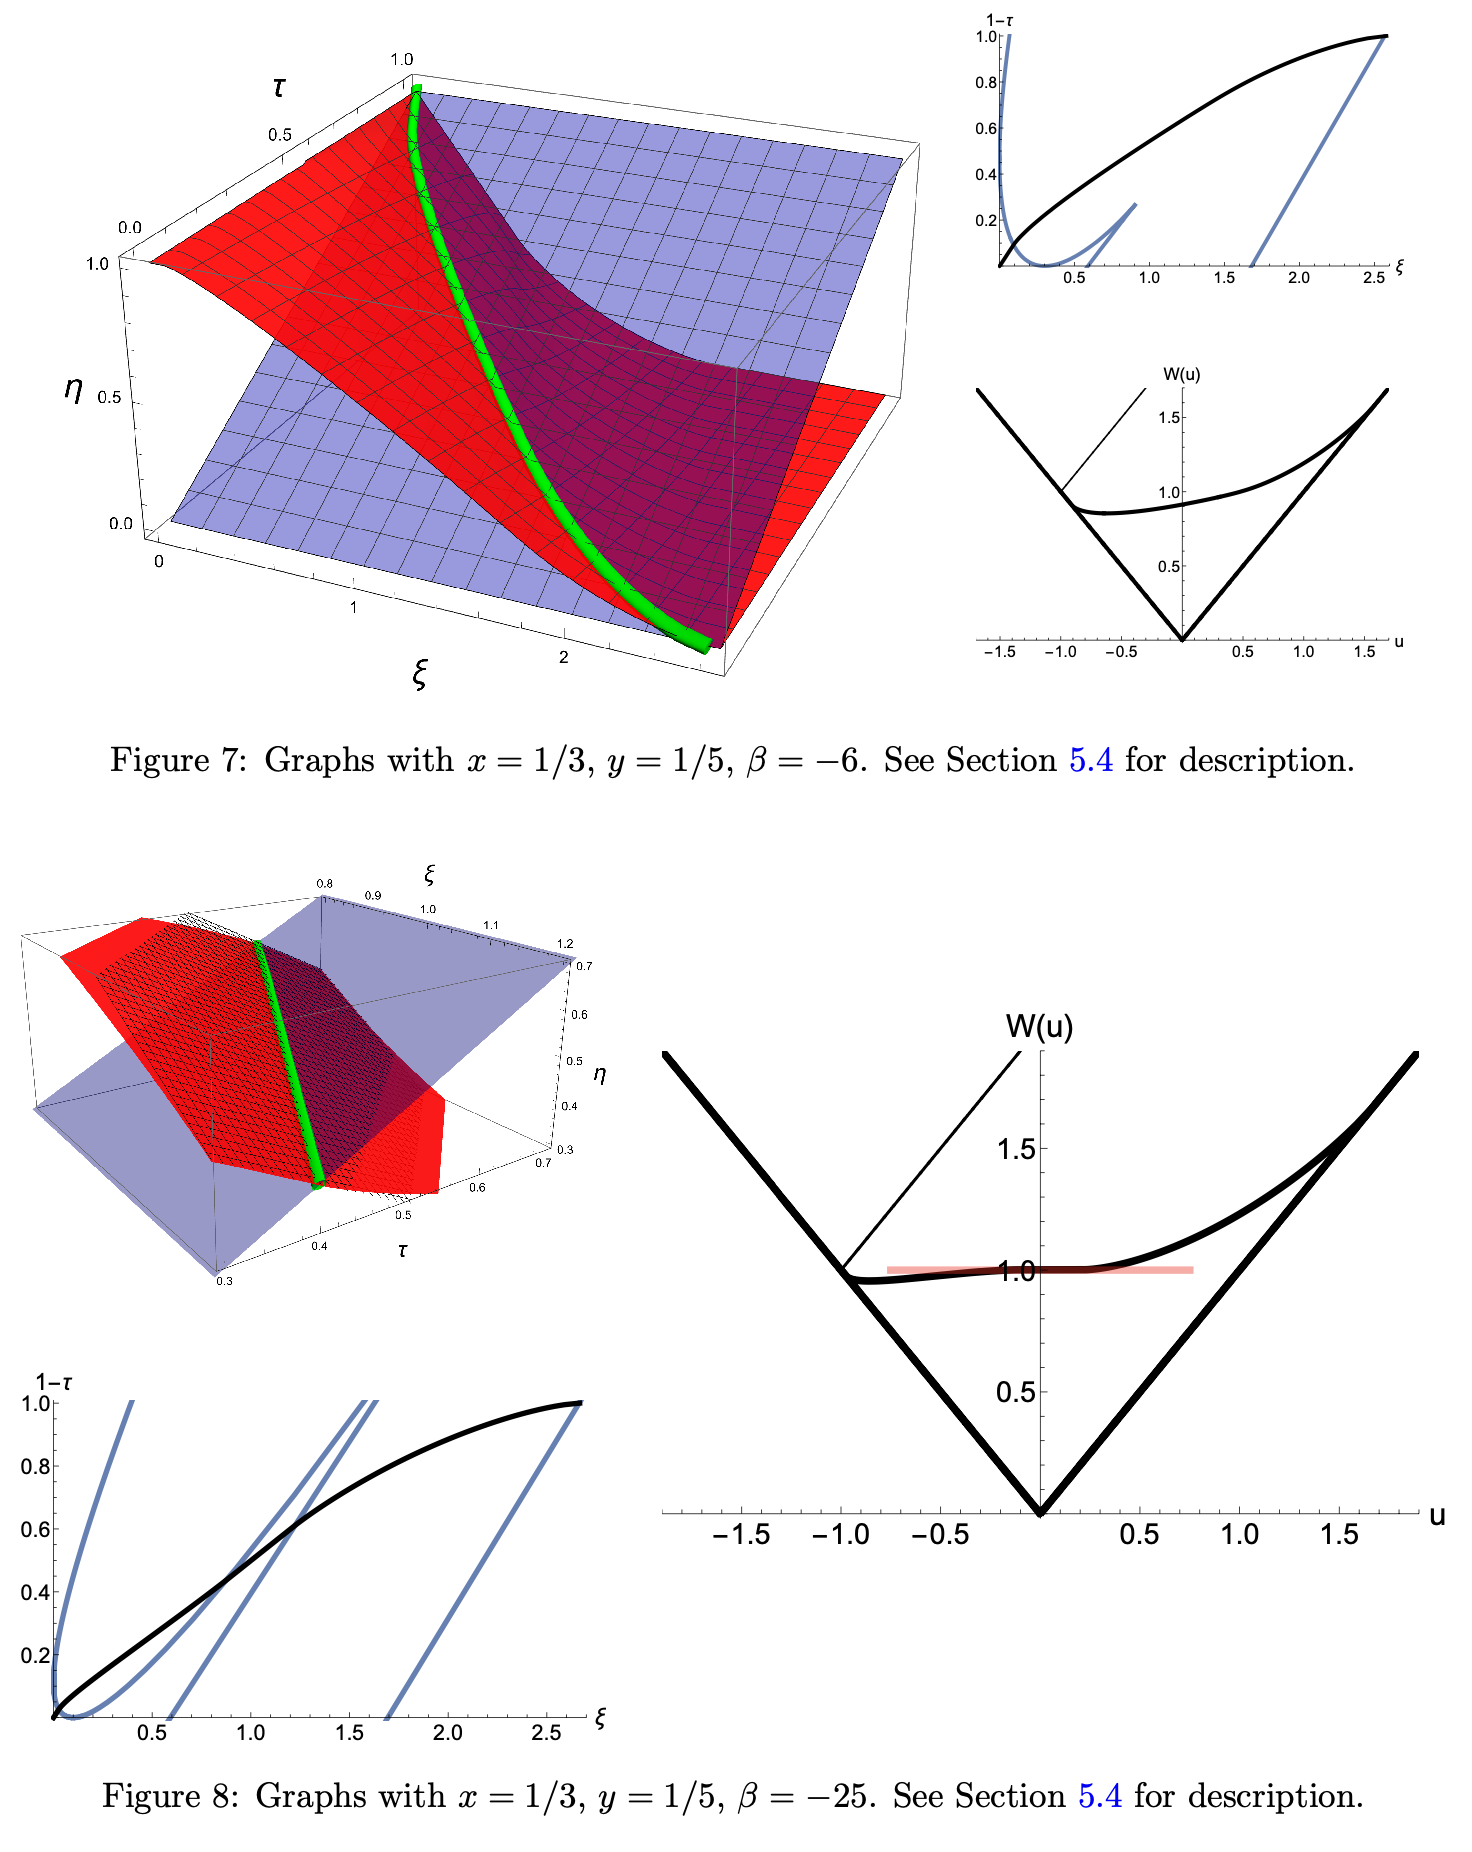 Limit shapes of 2d Schur processes and the corresponding Grothendieck random partitions